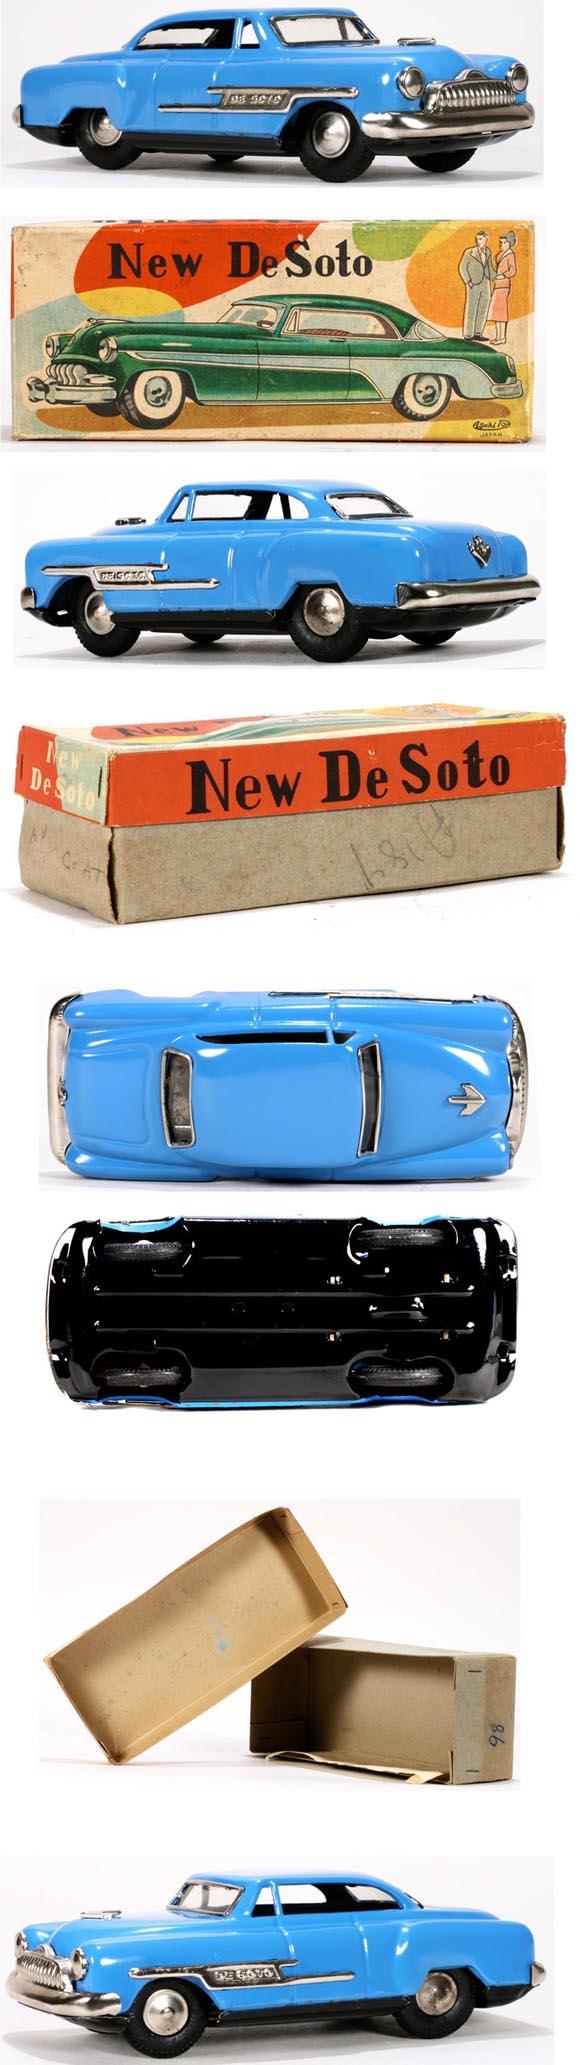 1954 Asahi, New DeSoto (FireDome V8) in Original Box